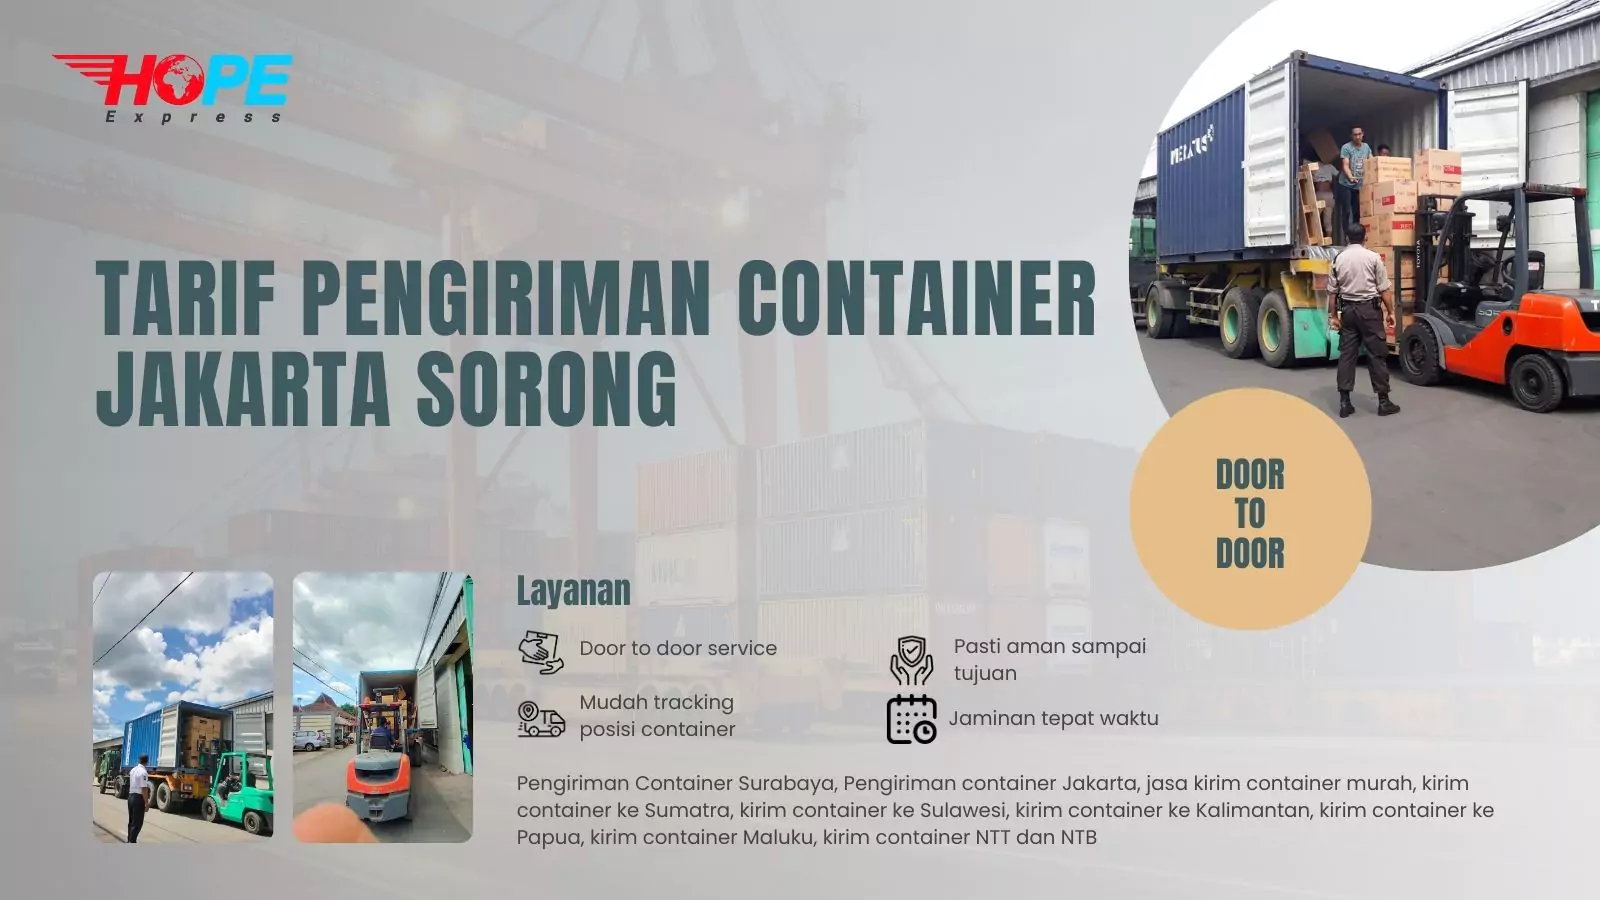 Tarif Pengiriman Container Jakarta Sorong